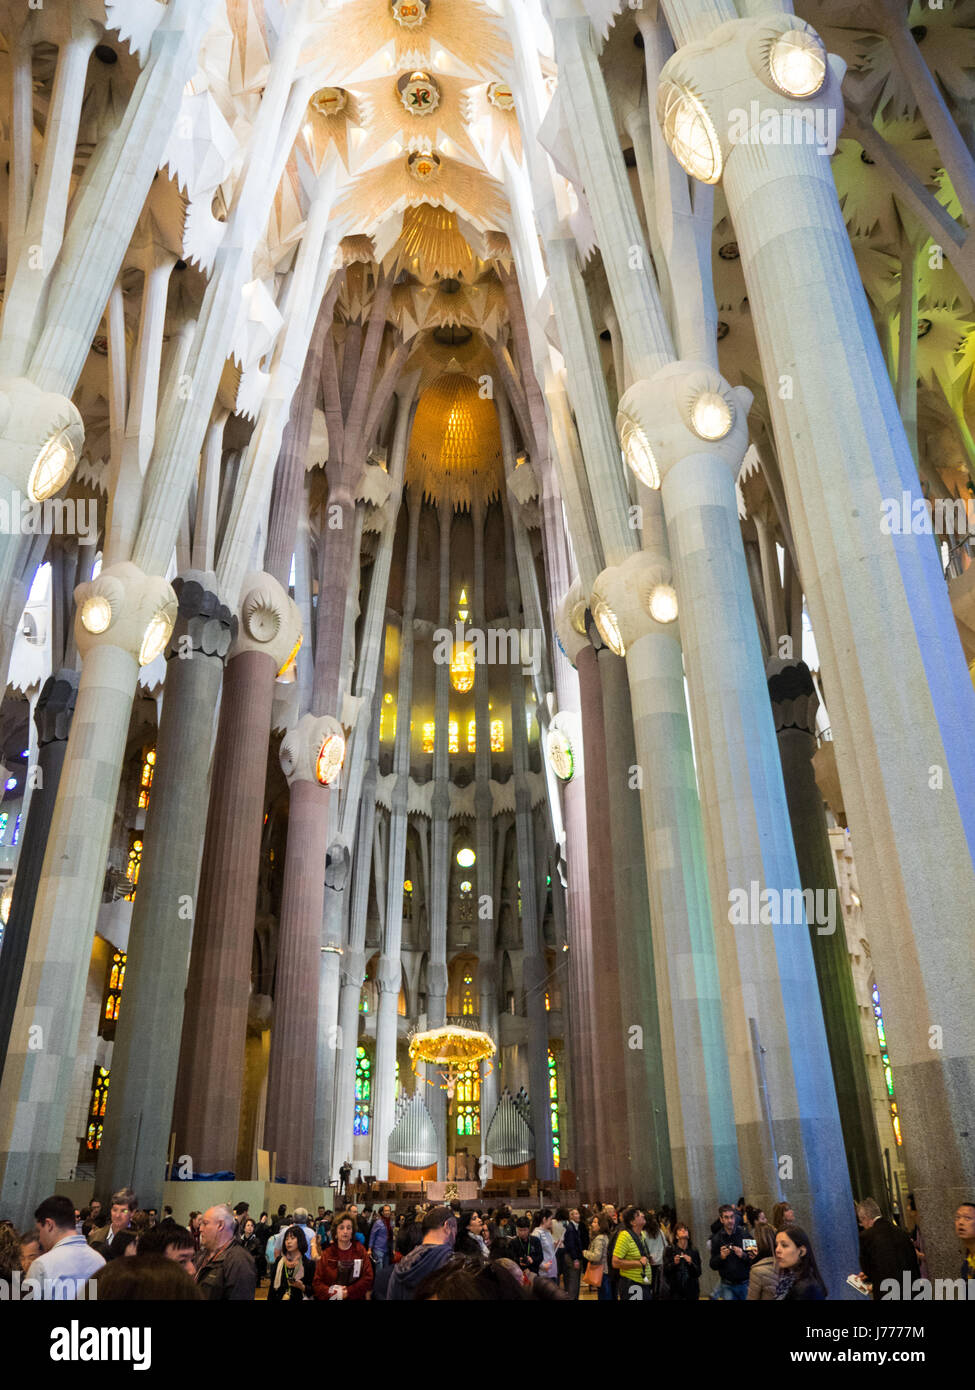 Church congregation and tourists under elaborate and decorative tree like columns and ceiling in Gaudi's Sagrada Familia Basilica, Barcelona, Spain. Stock Photo